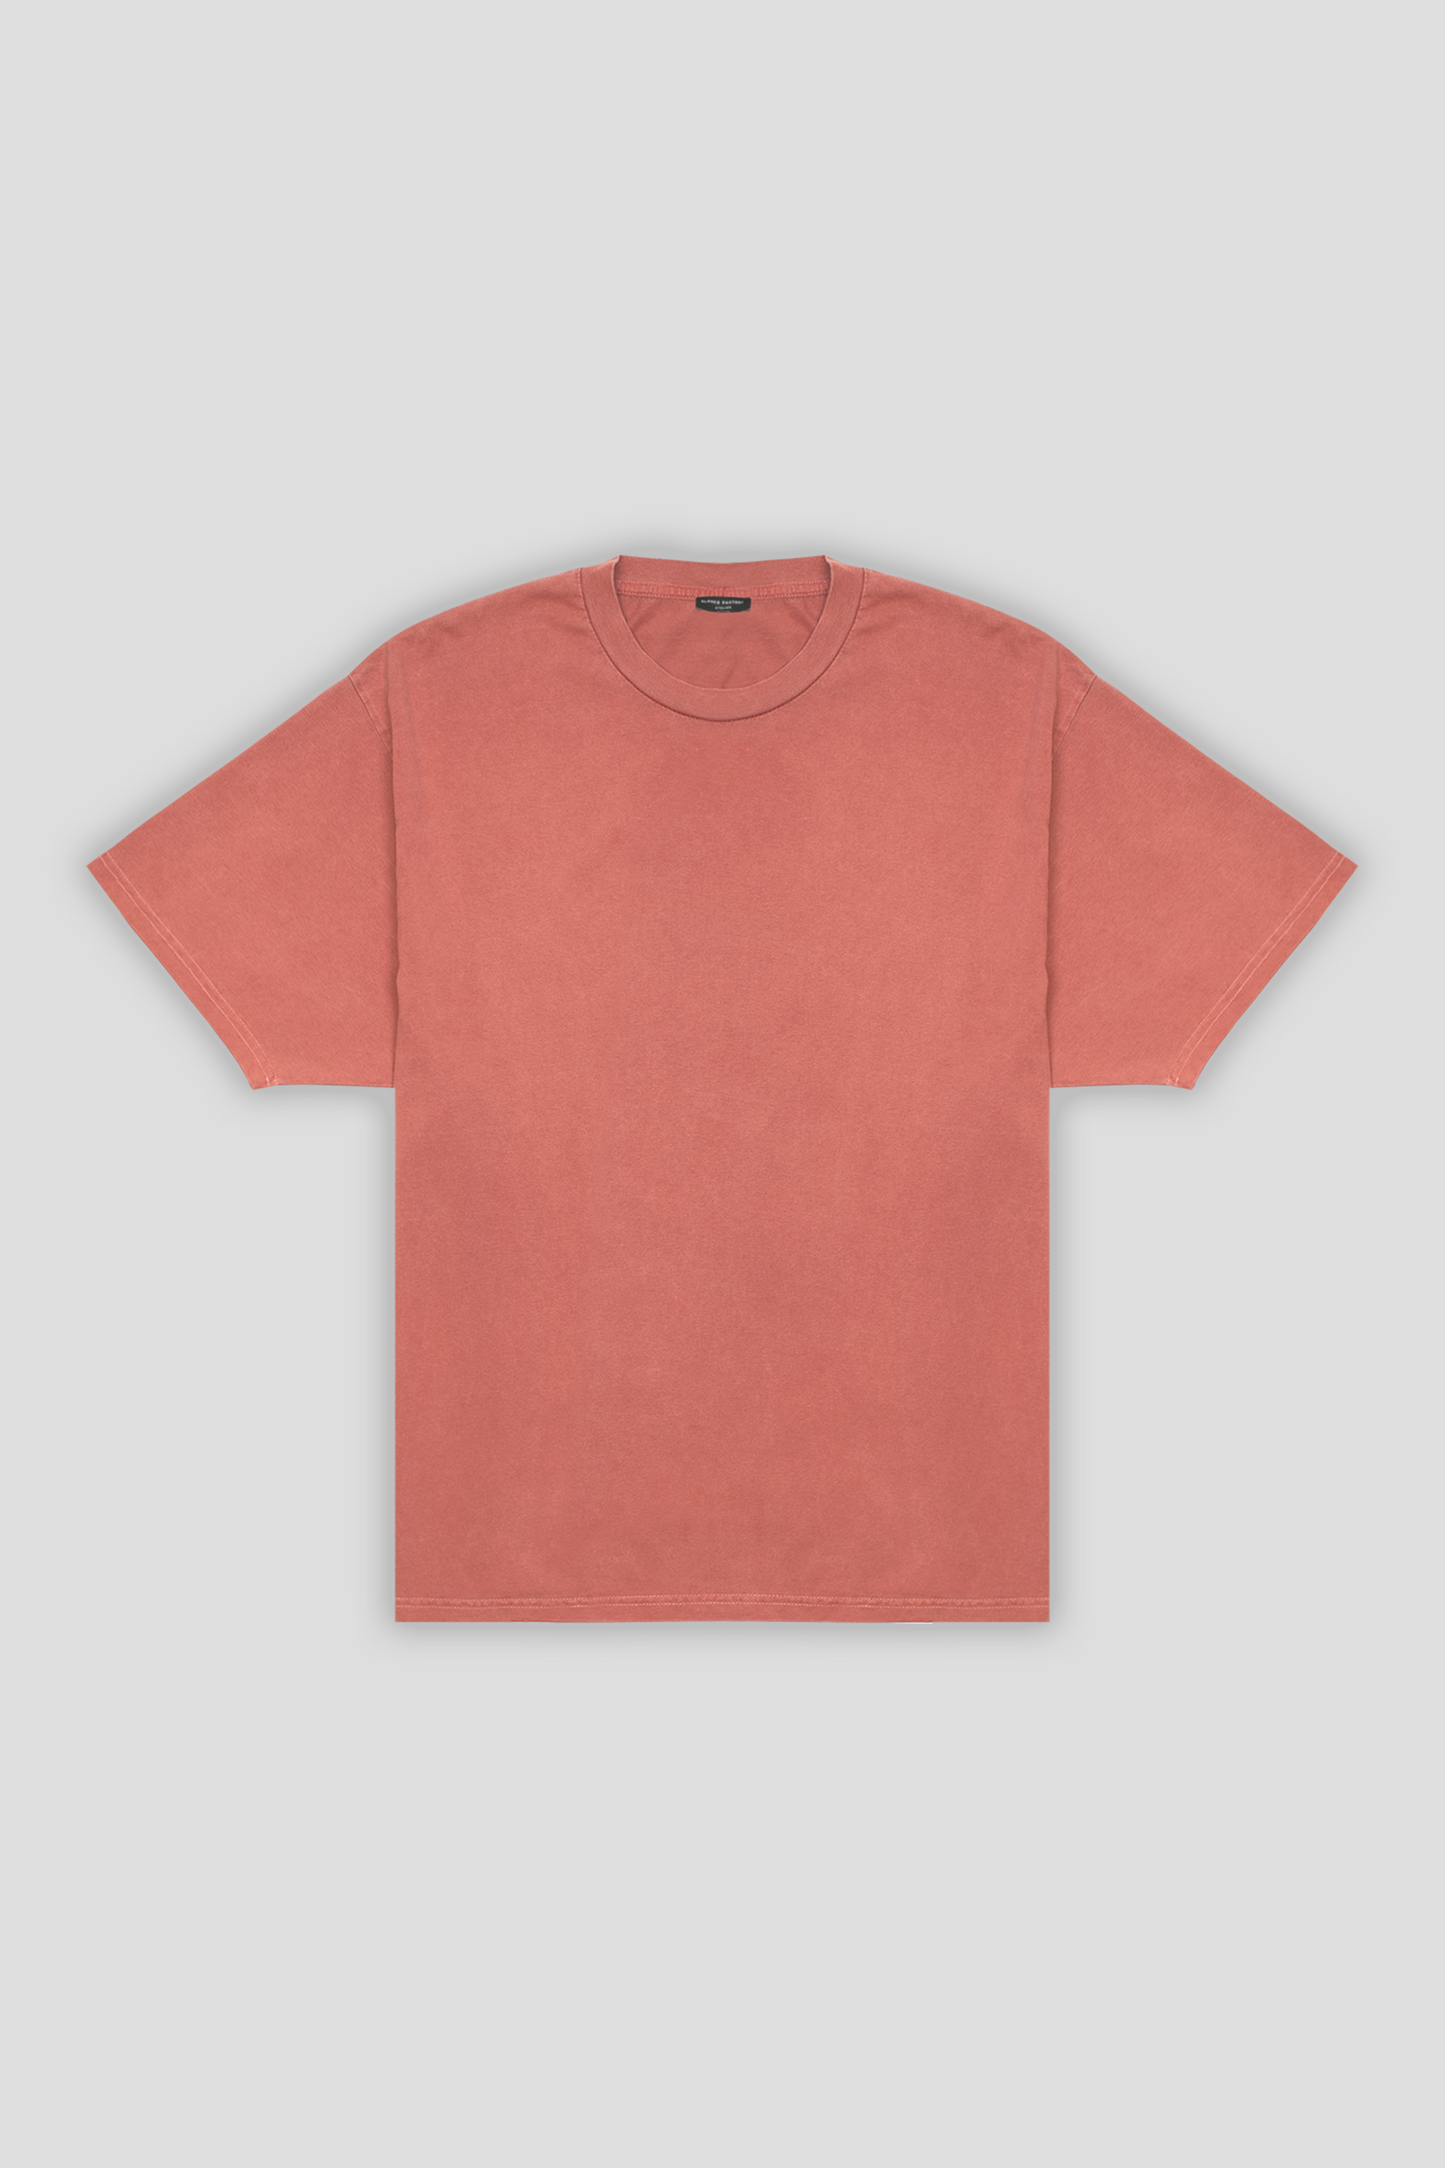 Atelier T-shirt Rust